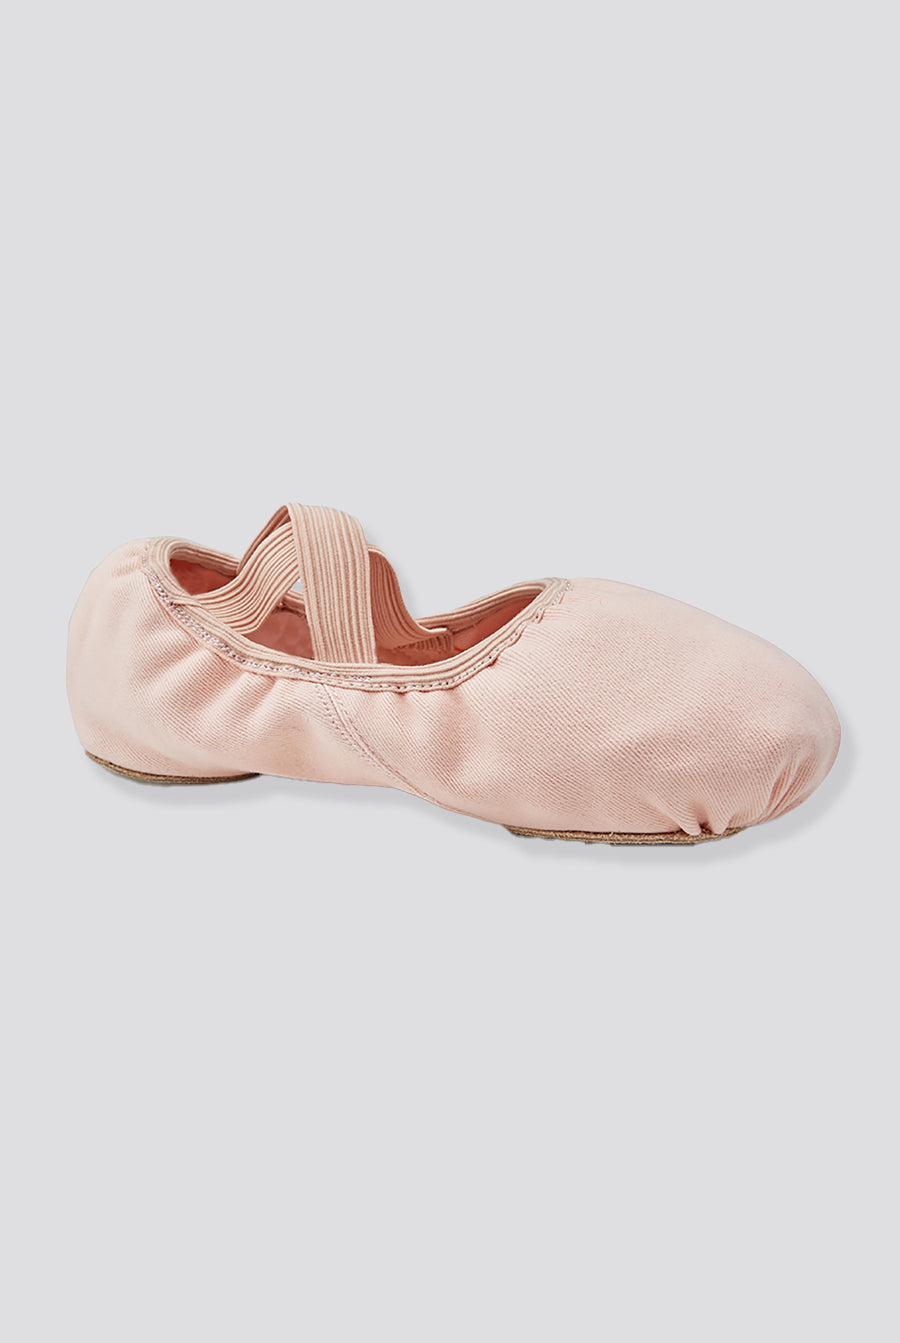 split sole ballet shoes ballet pink side view